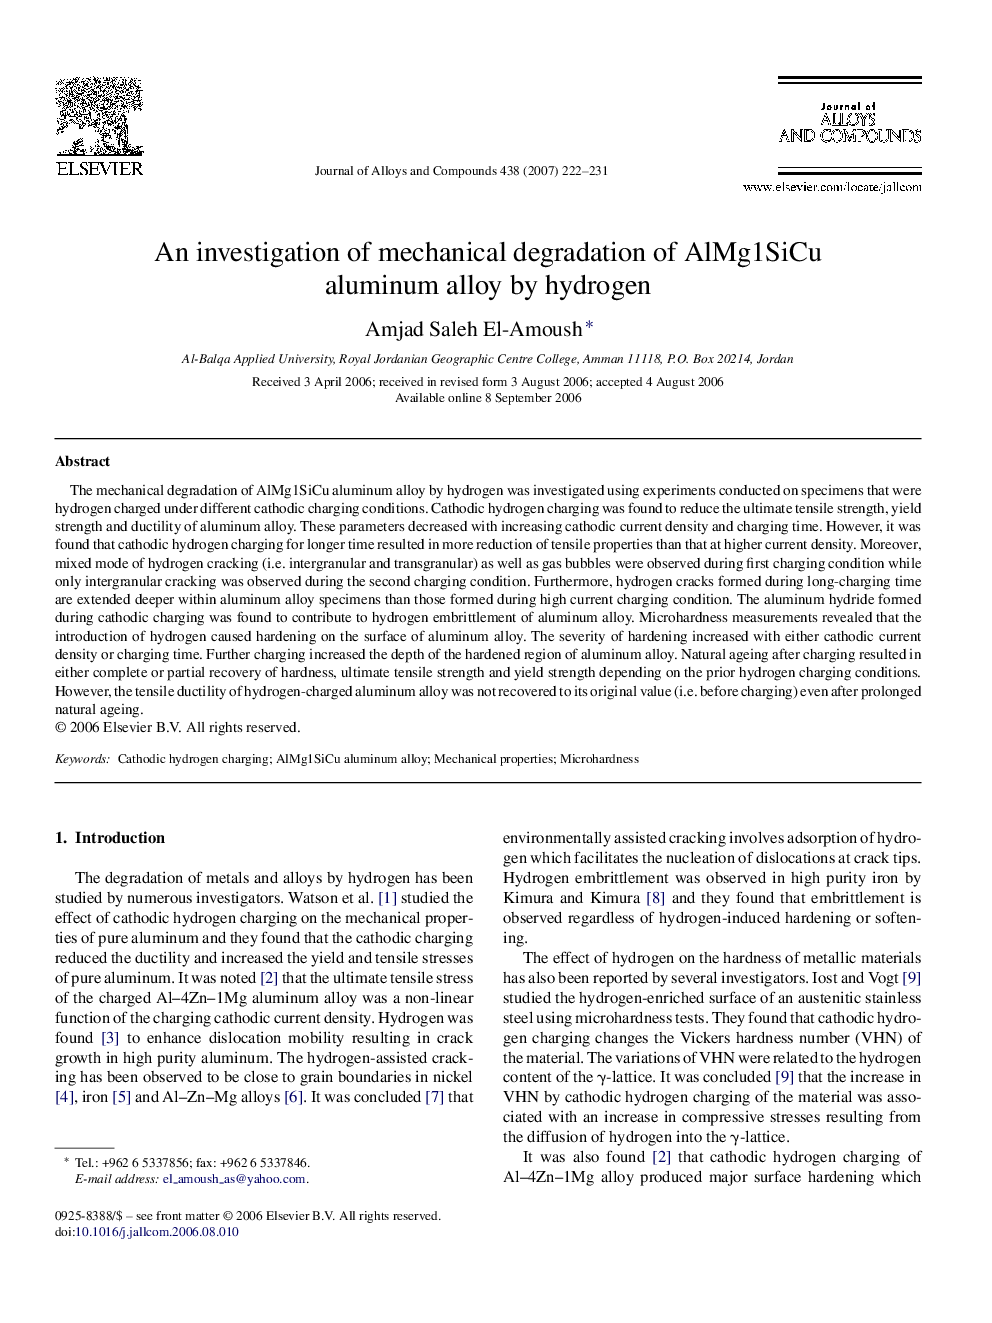 An investigation of mechanical degradation of AlMg1SiCu aluminum alloy by hydrogen